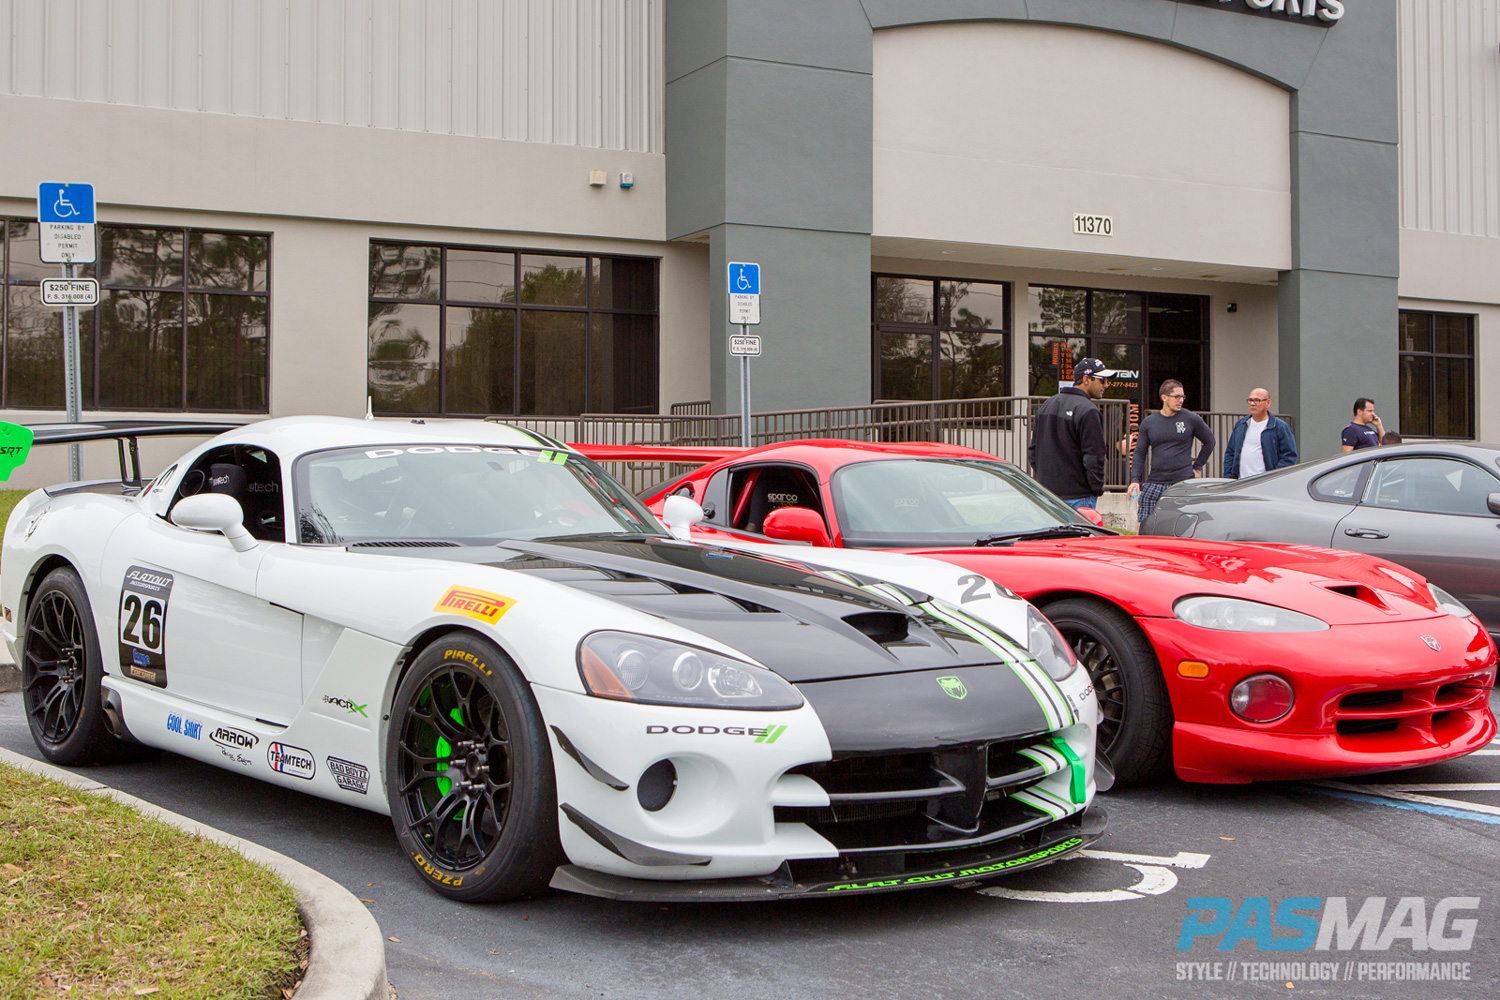 Titan Motorsports Open House 2015: Orlando, FL (Photo by Lafayette Britto Photography)